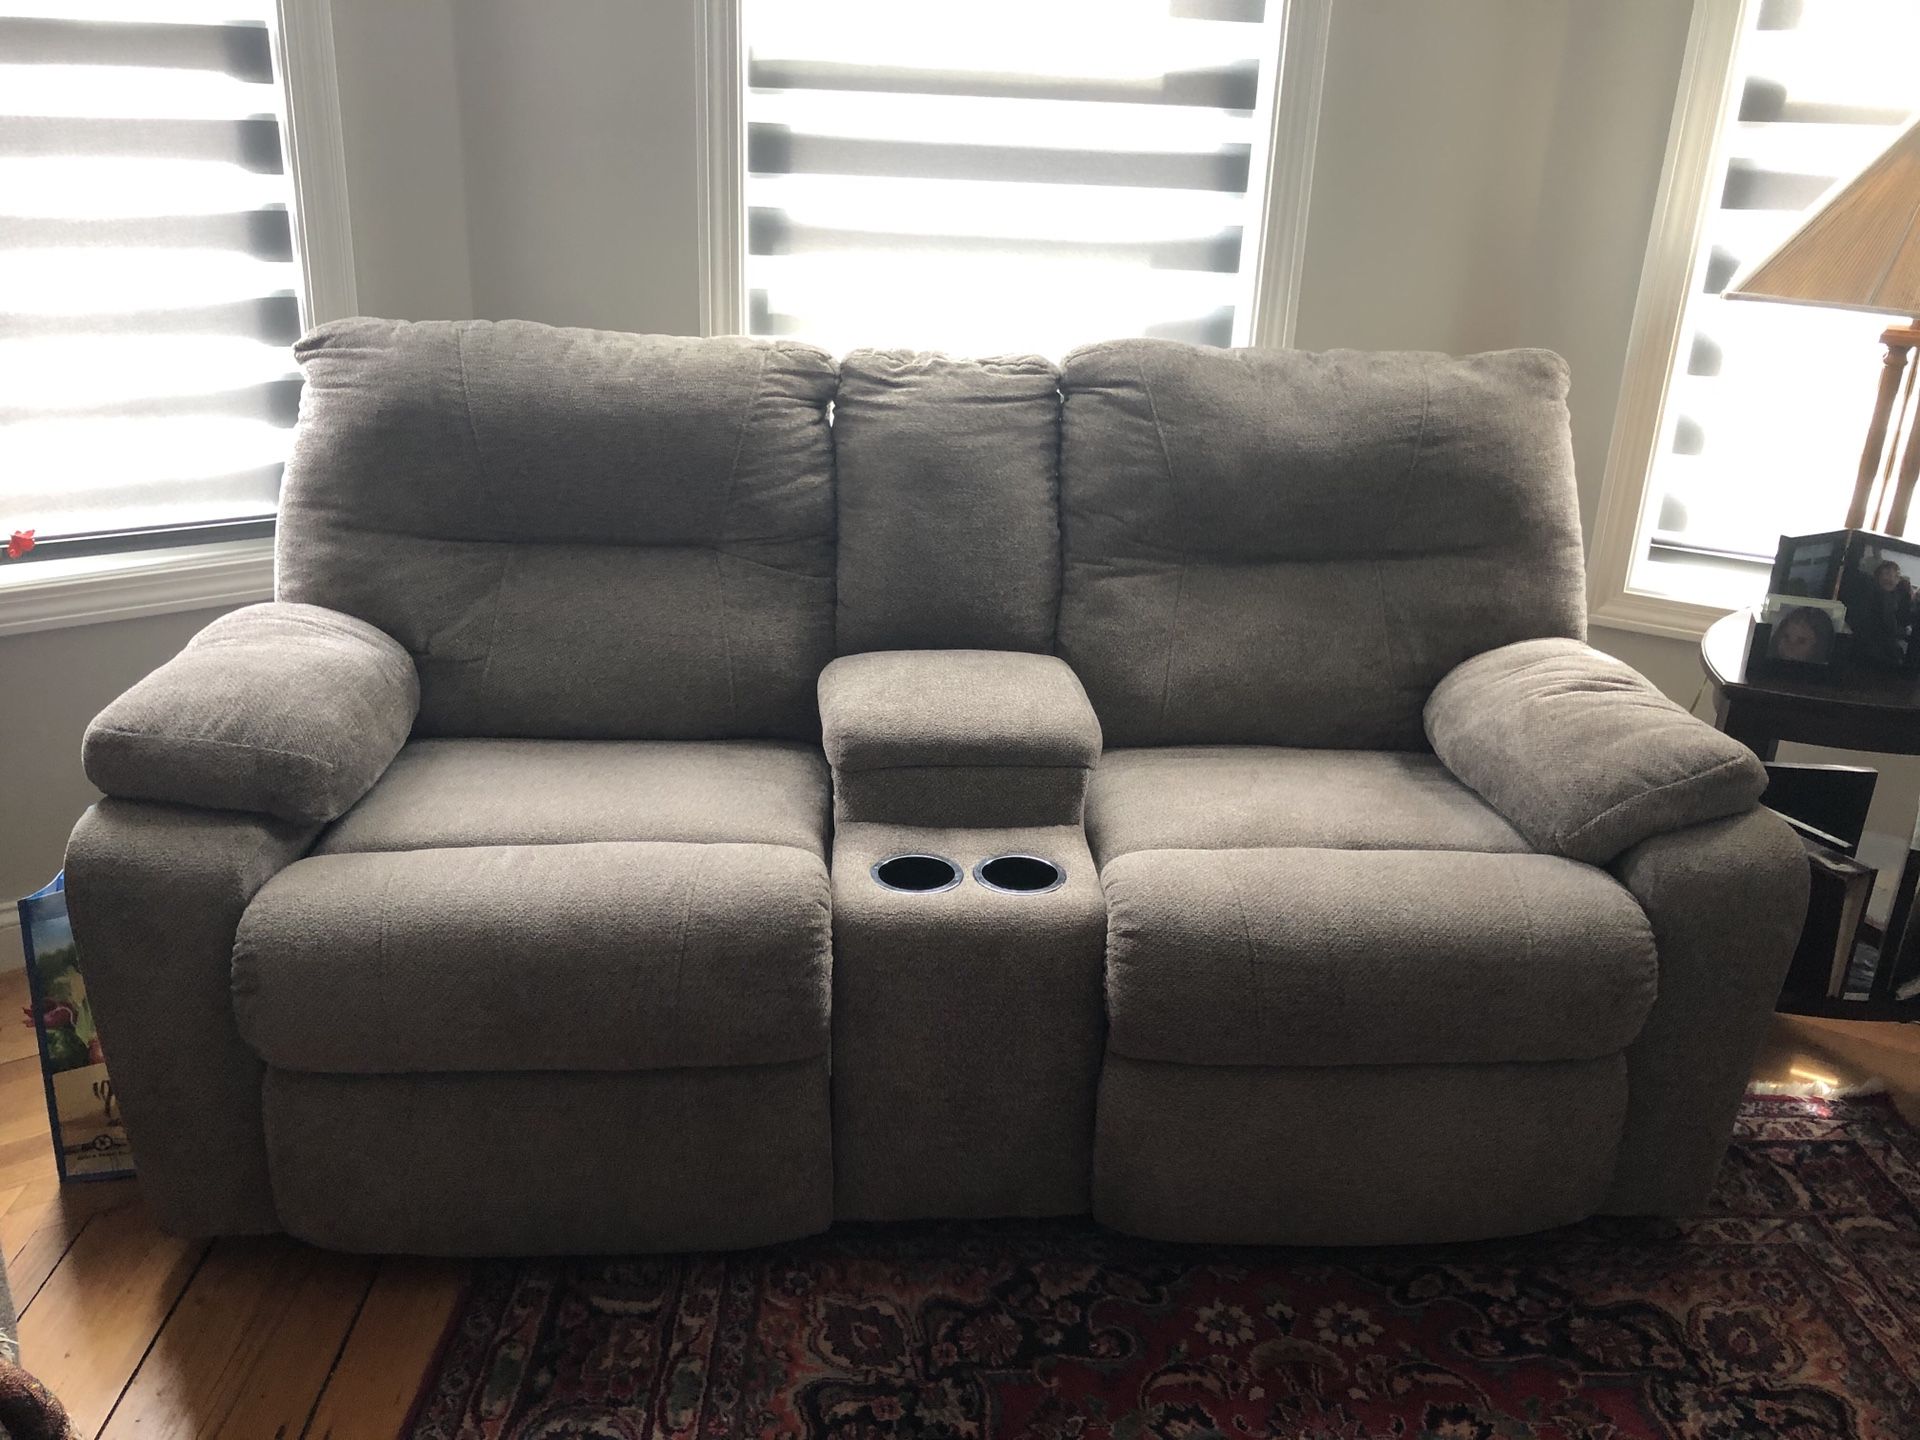 Jordan’s Furniture reclining couch